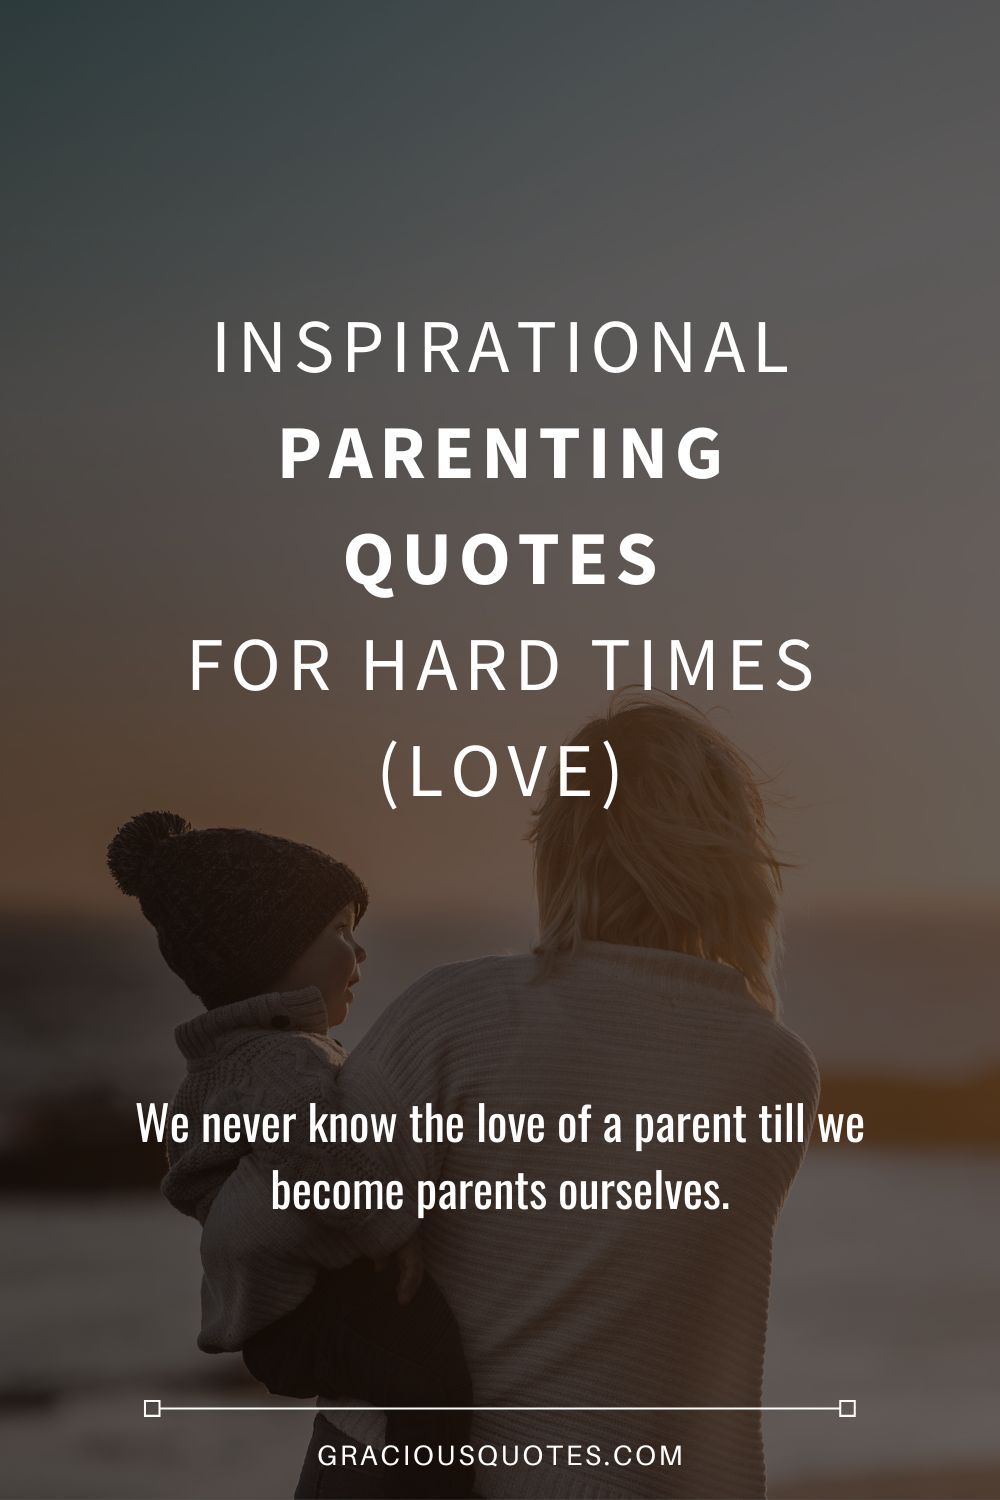 Pin on Parenting Wisdom